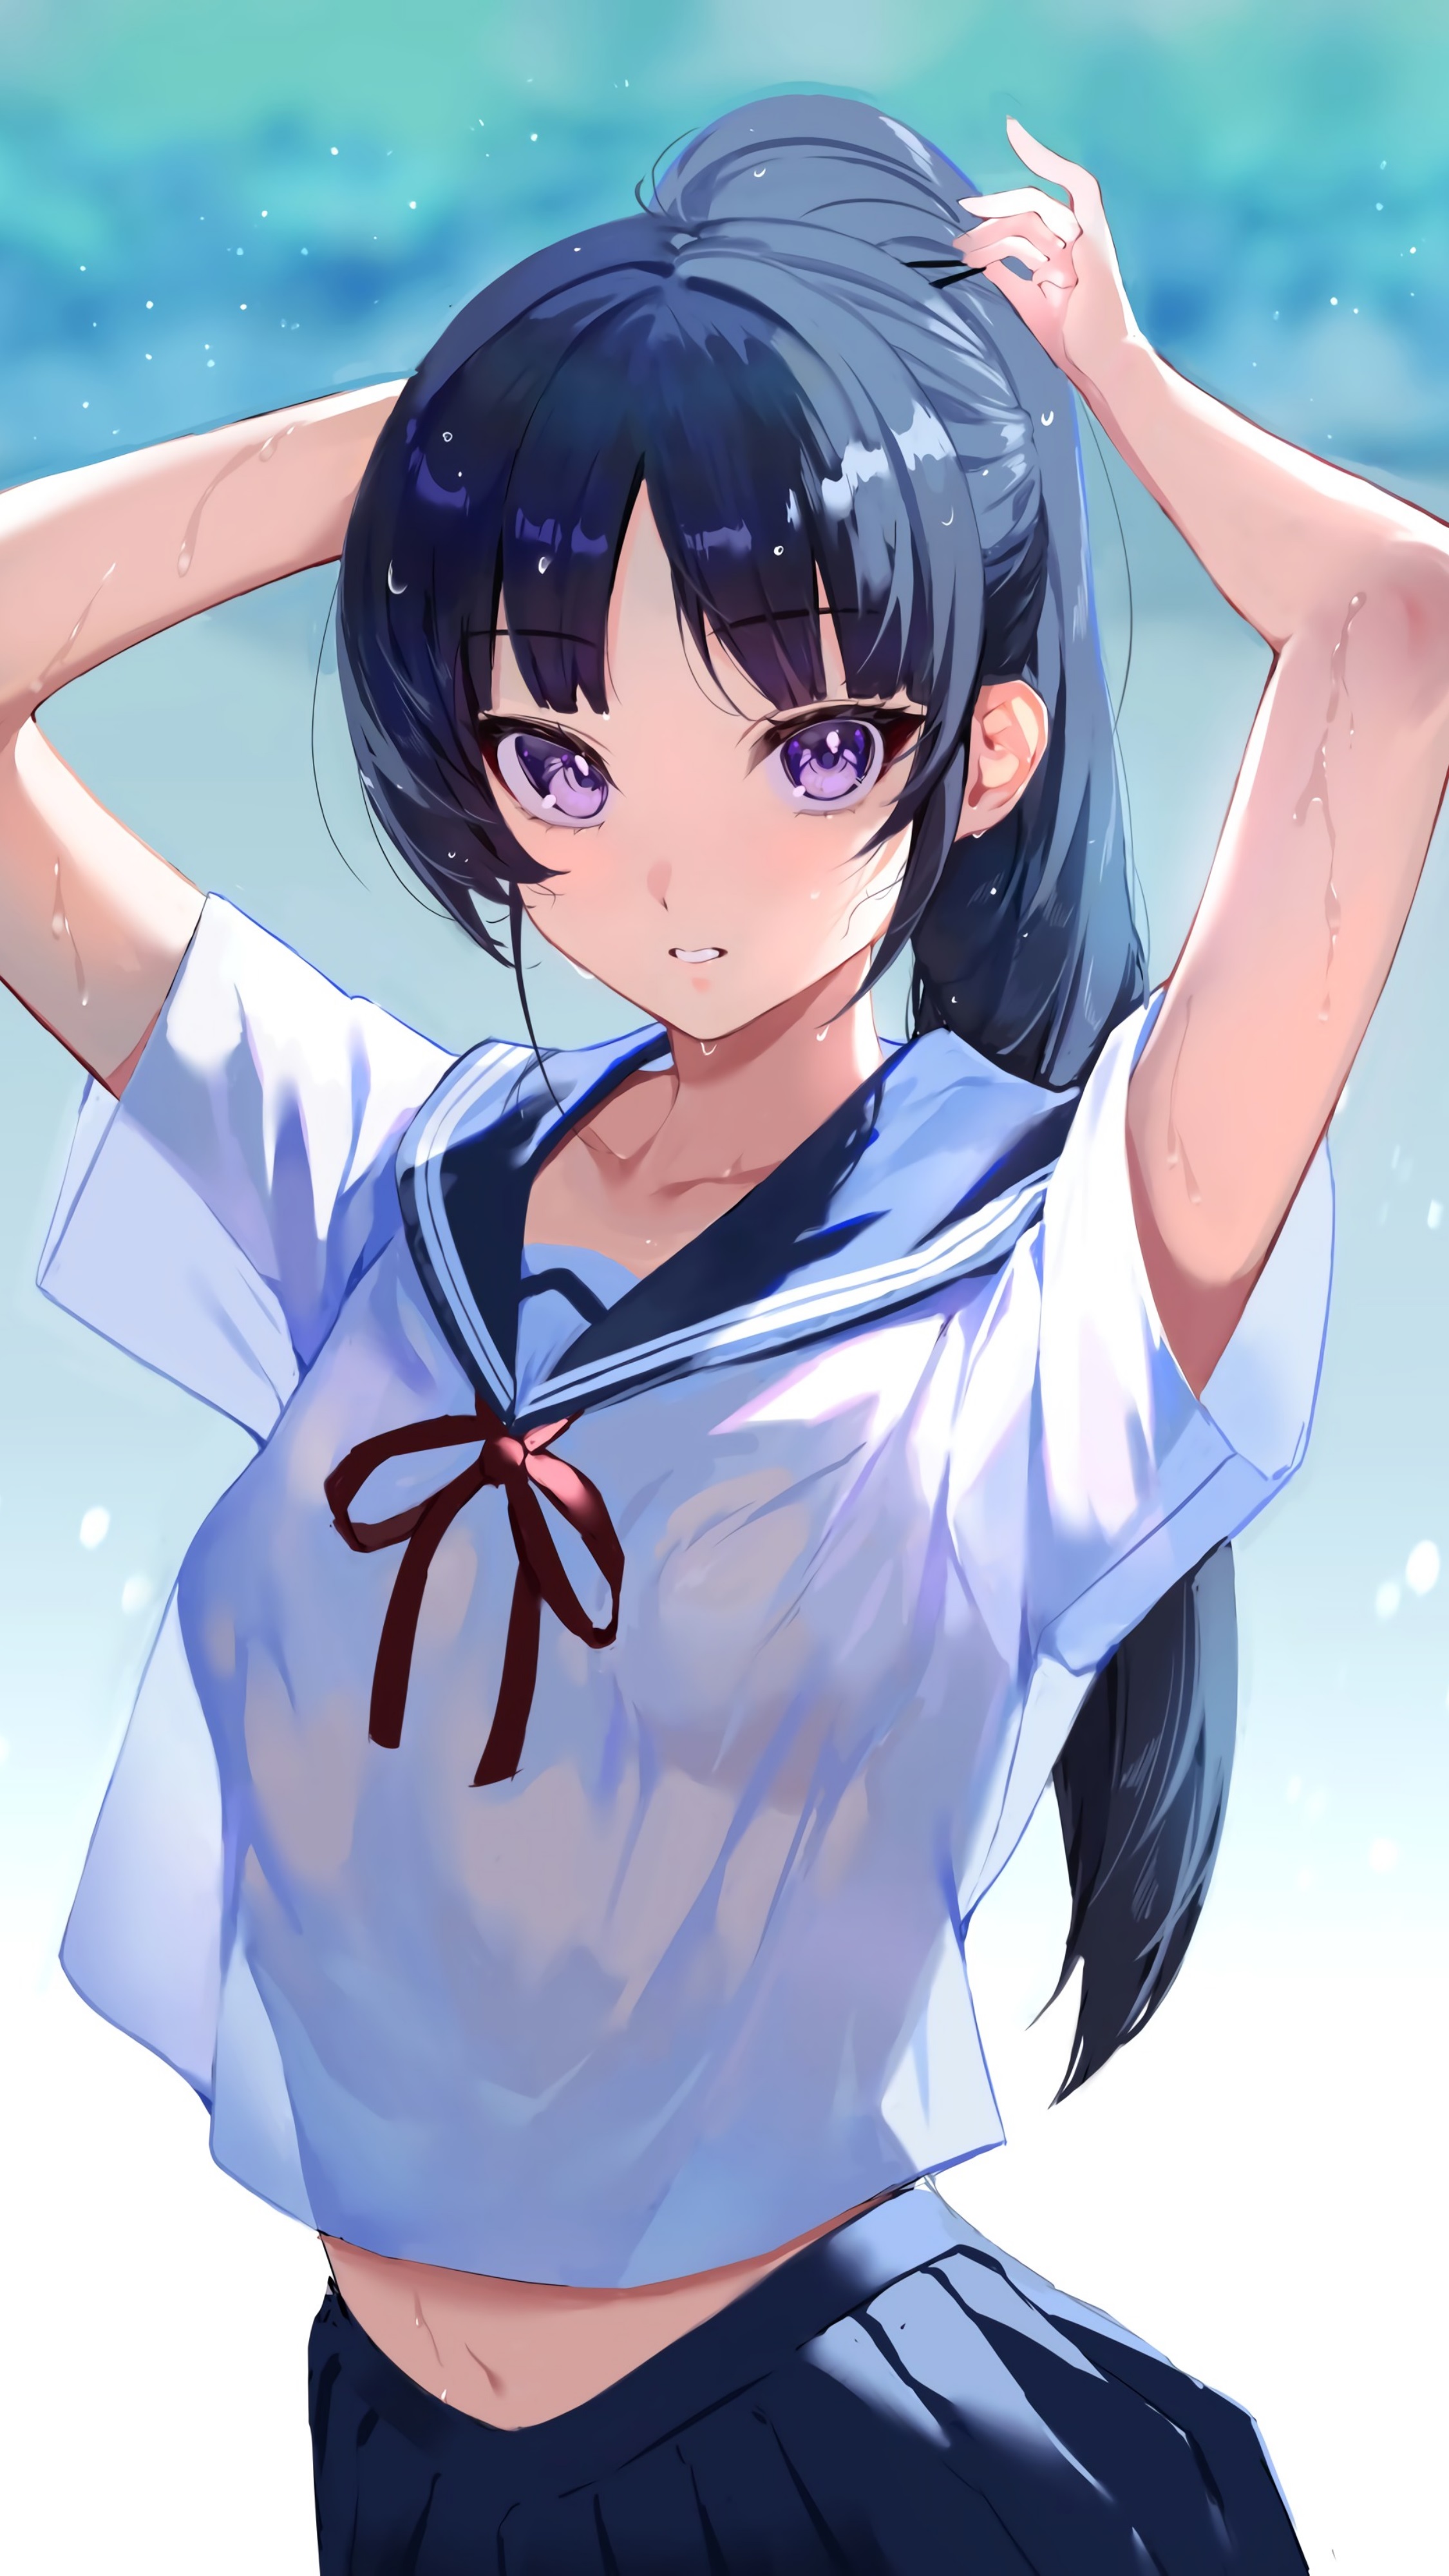 Anime 2250x4000 anime girls school uniform schoolgirl arms up wet ponytail dark hair purple eyes artwork Ichibi